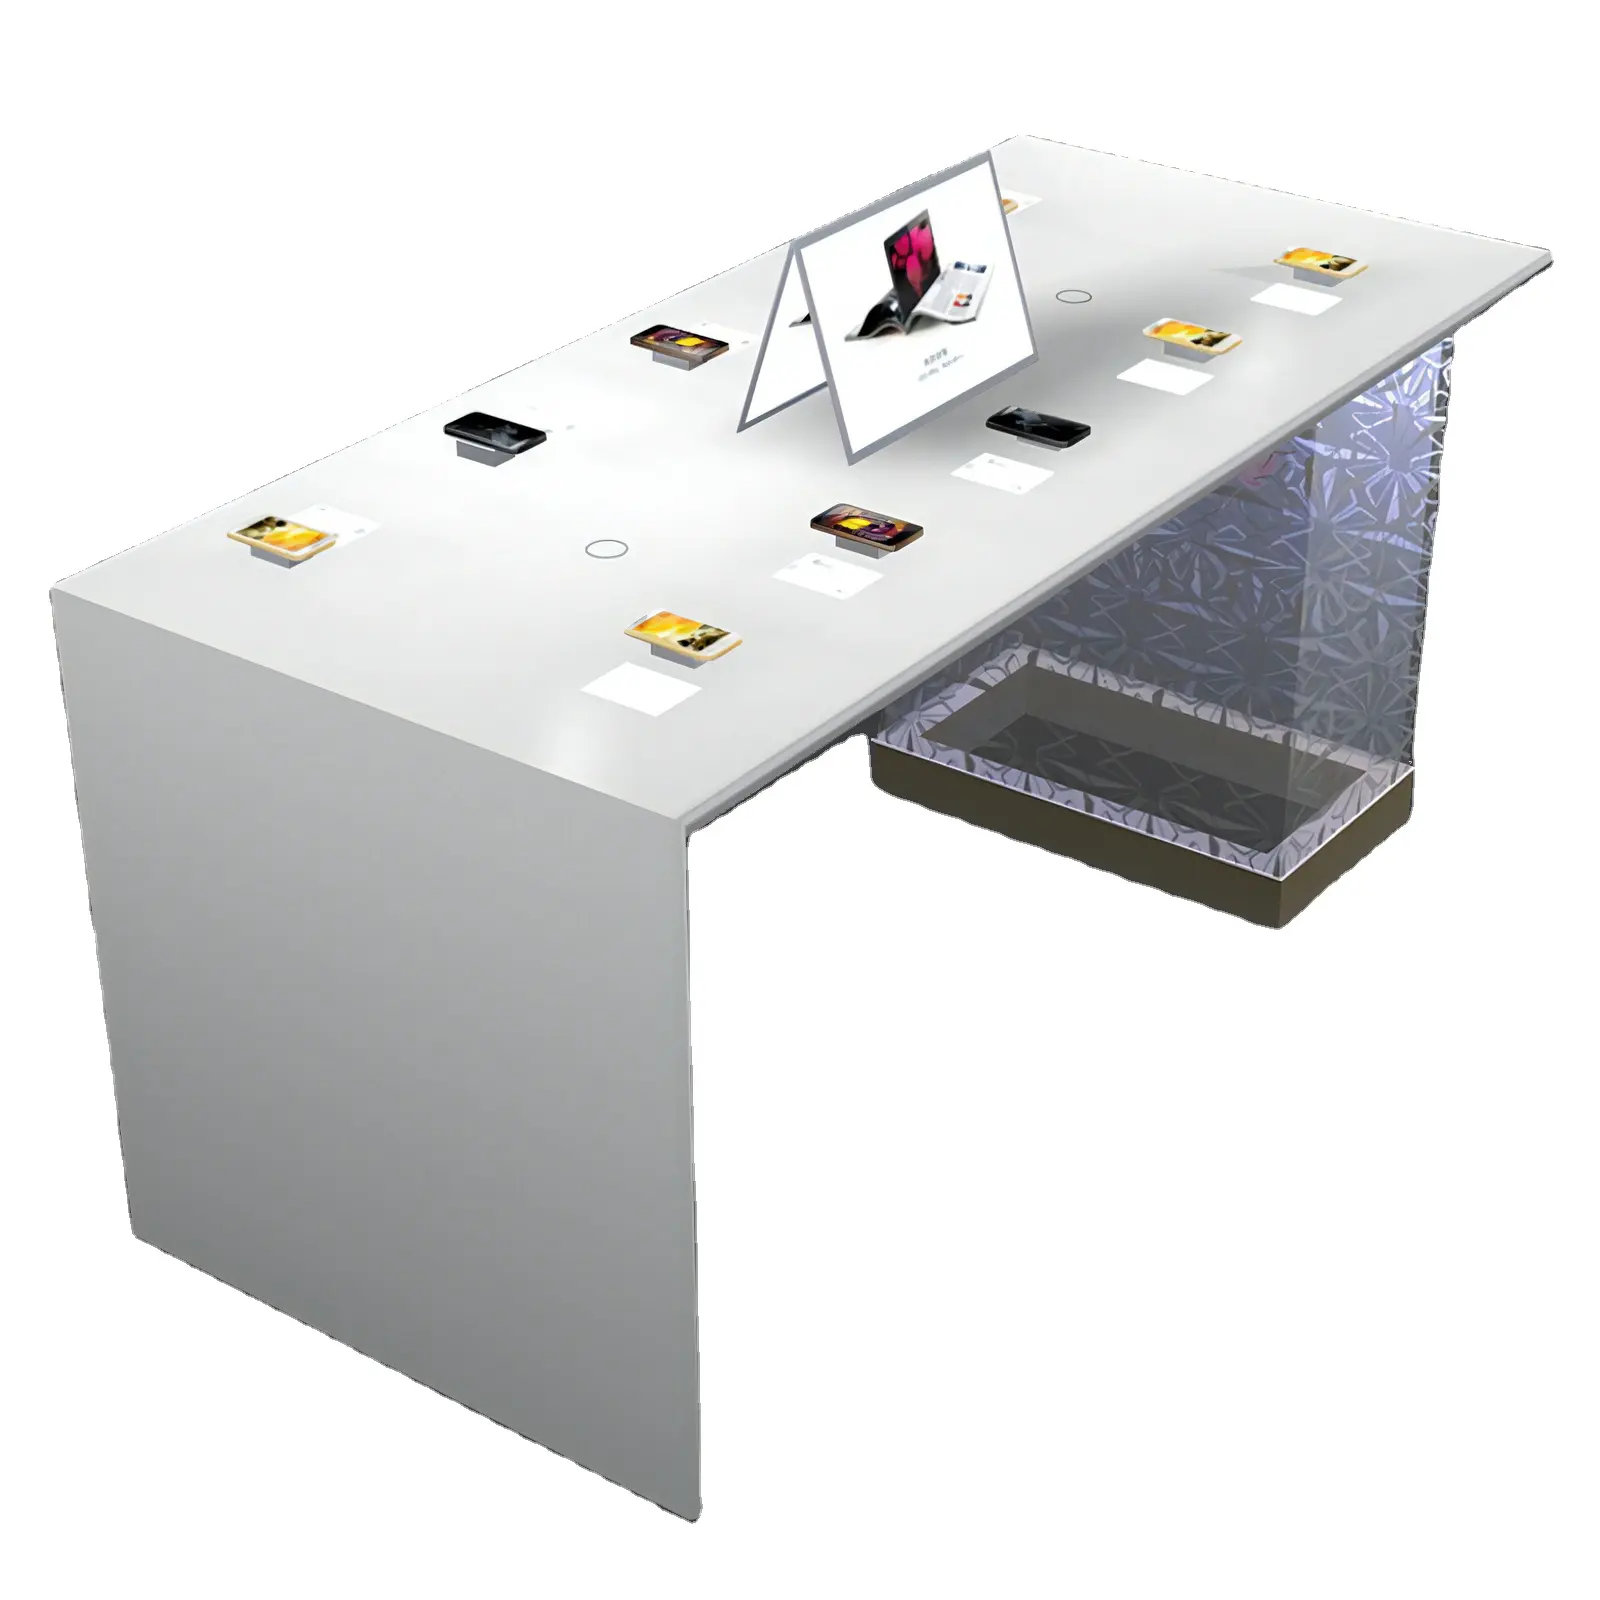 Artworld ดิสเพลย์โทรศัพท์มือถือไม้โต๊ะออกแบบสำหรับเก็บโทรศัพท์